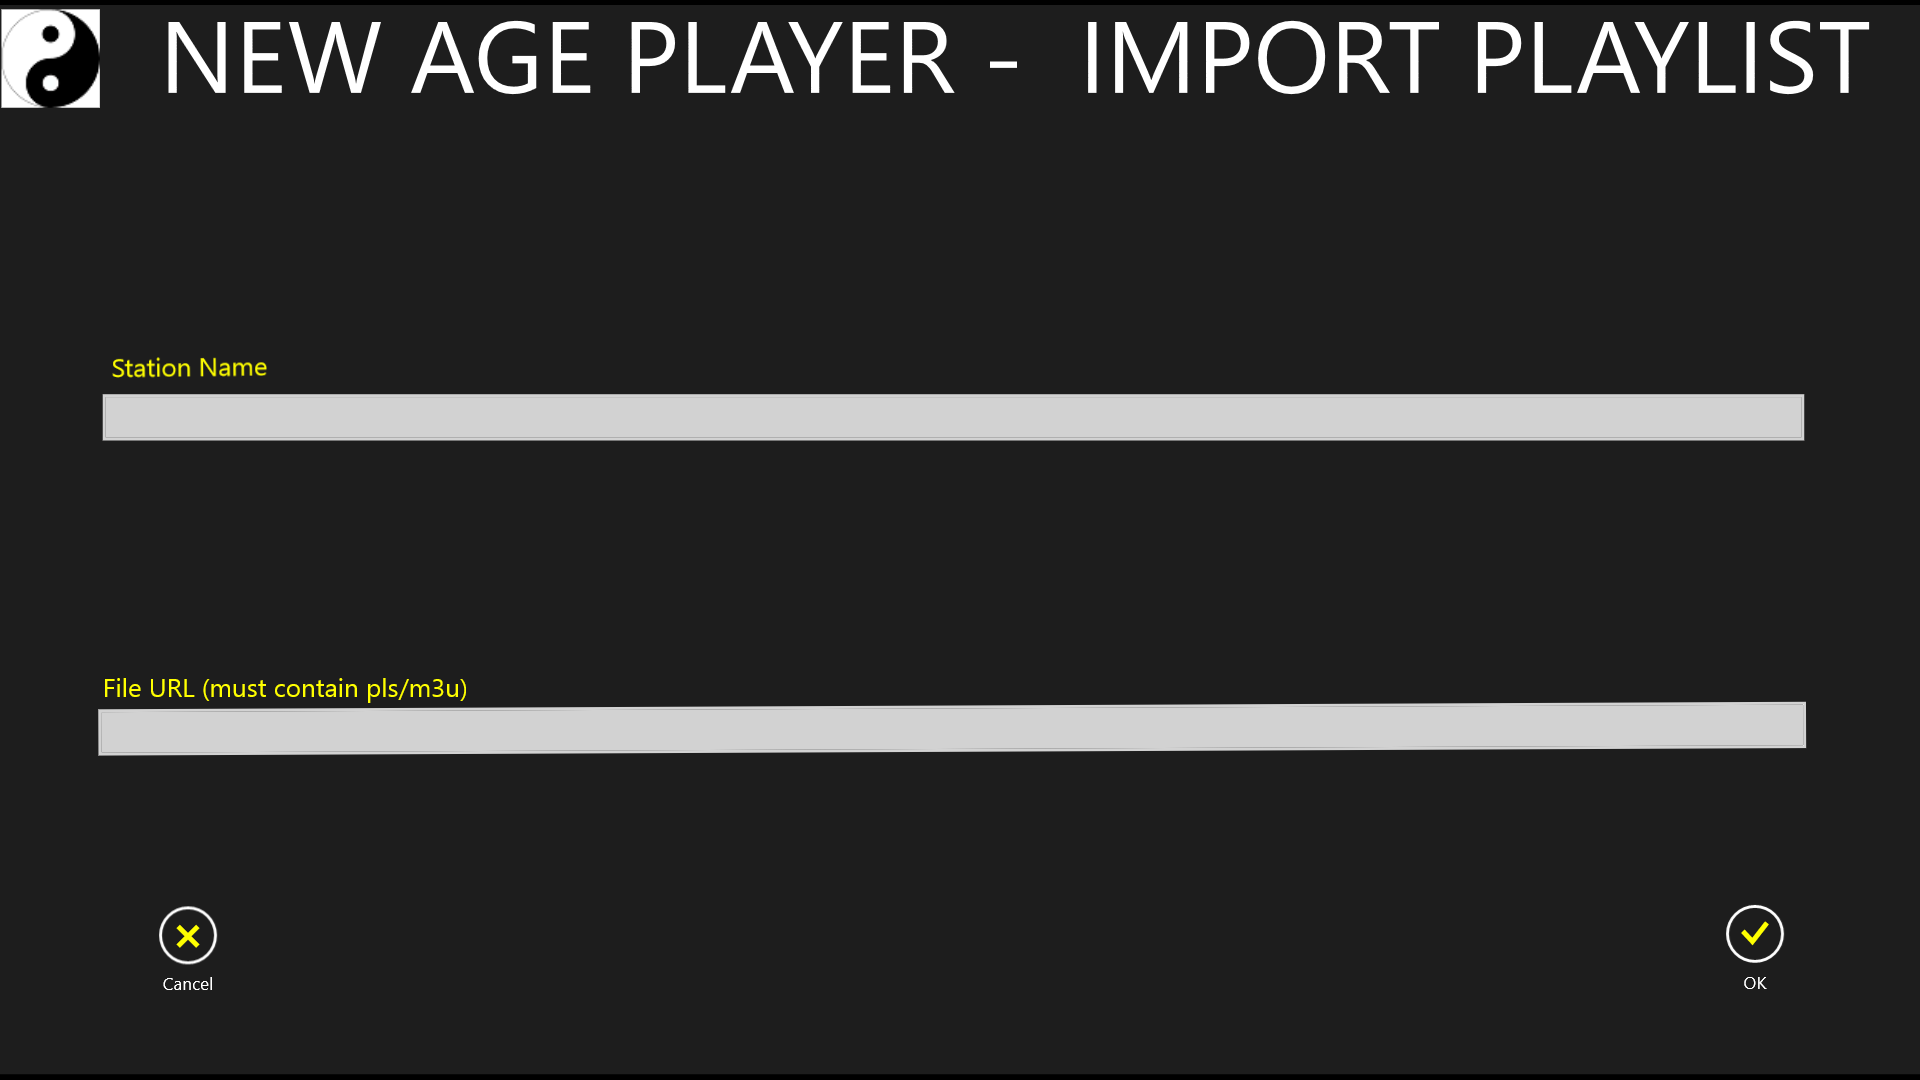 Import Playlist screen